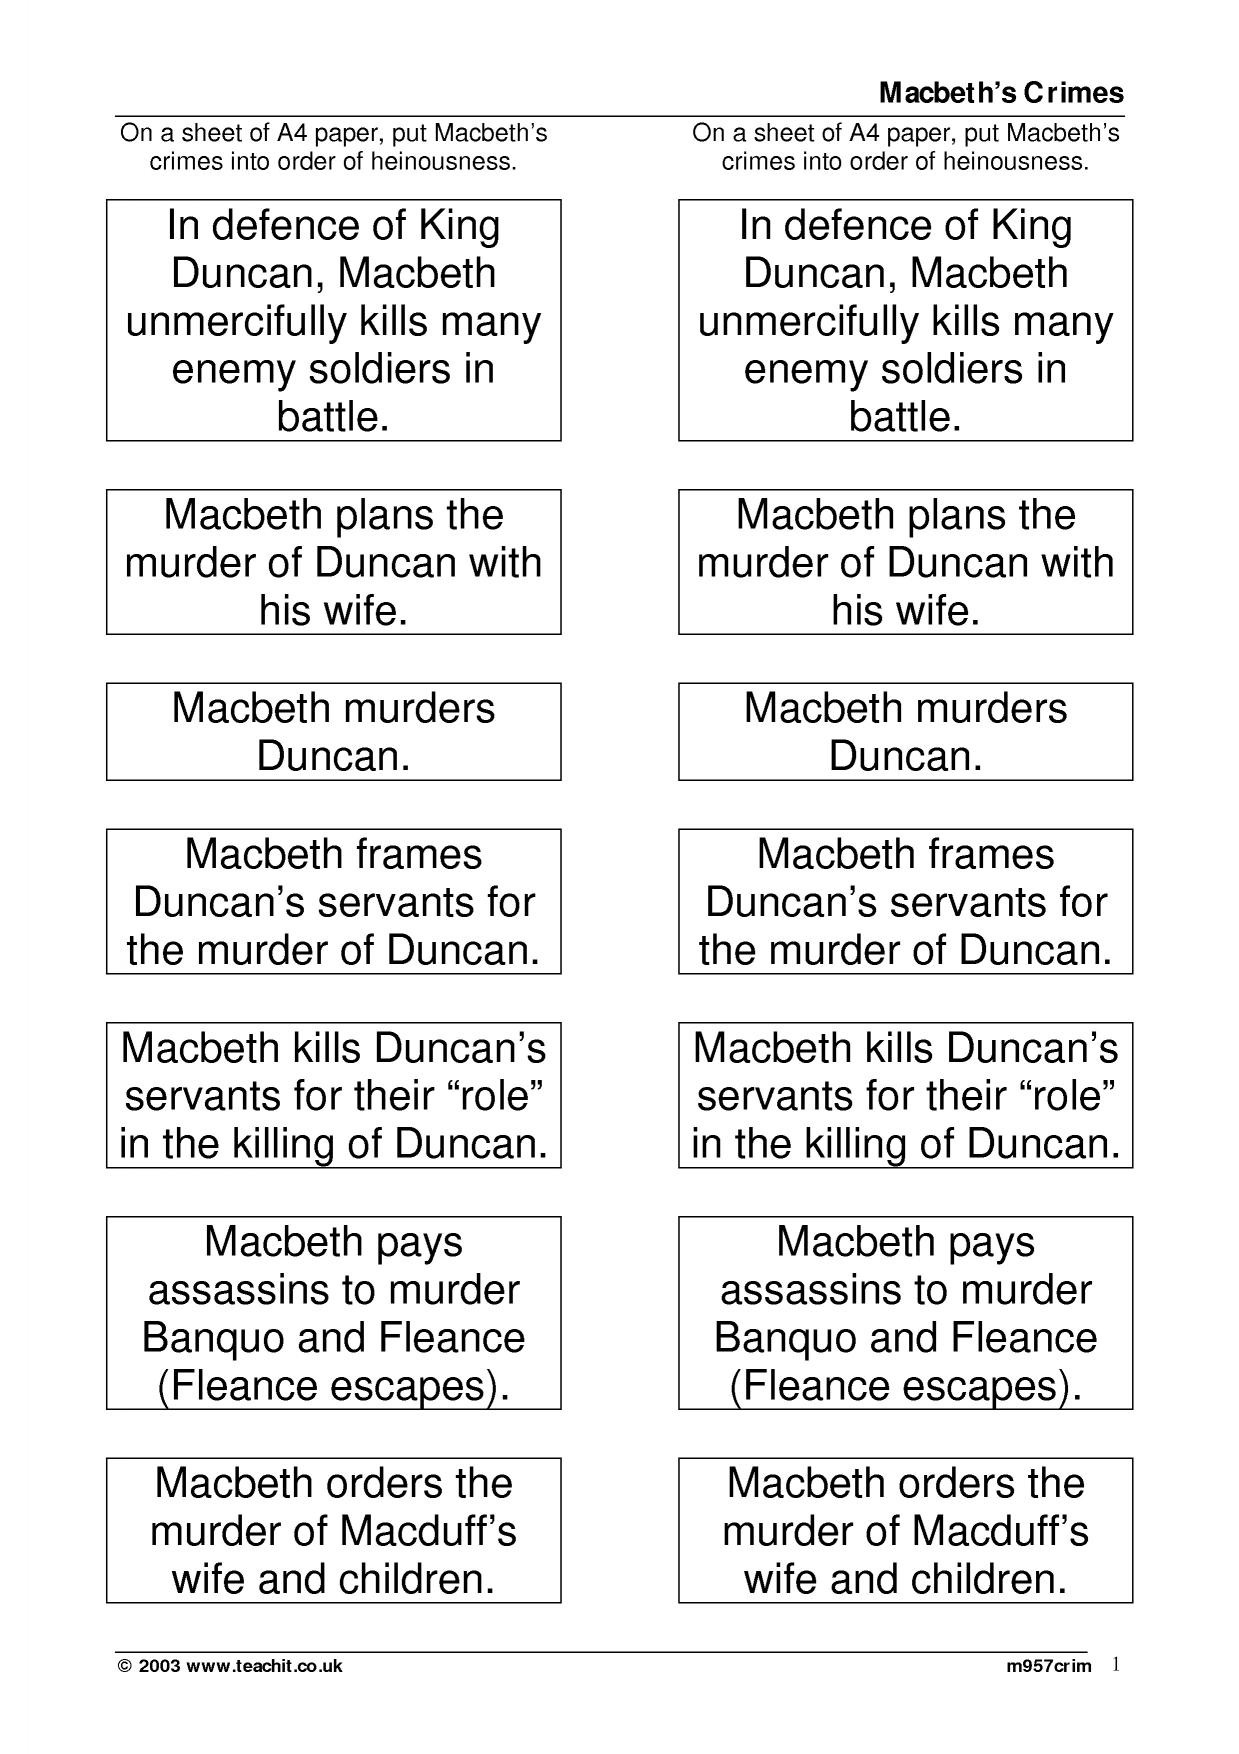 Macbeth's